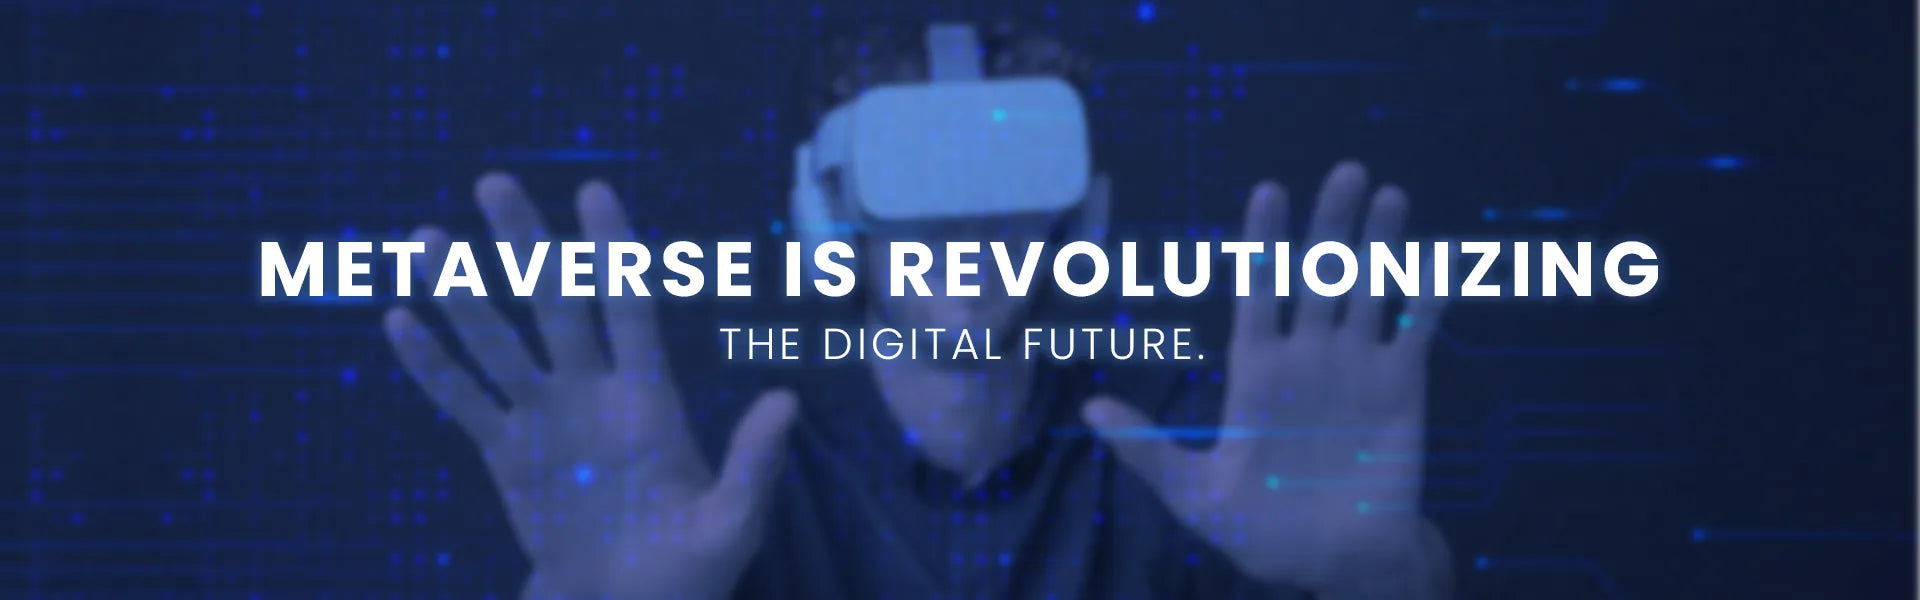 Metaverse is revolutionizing the digital future.